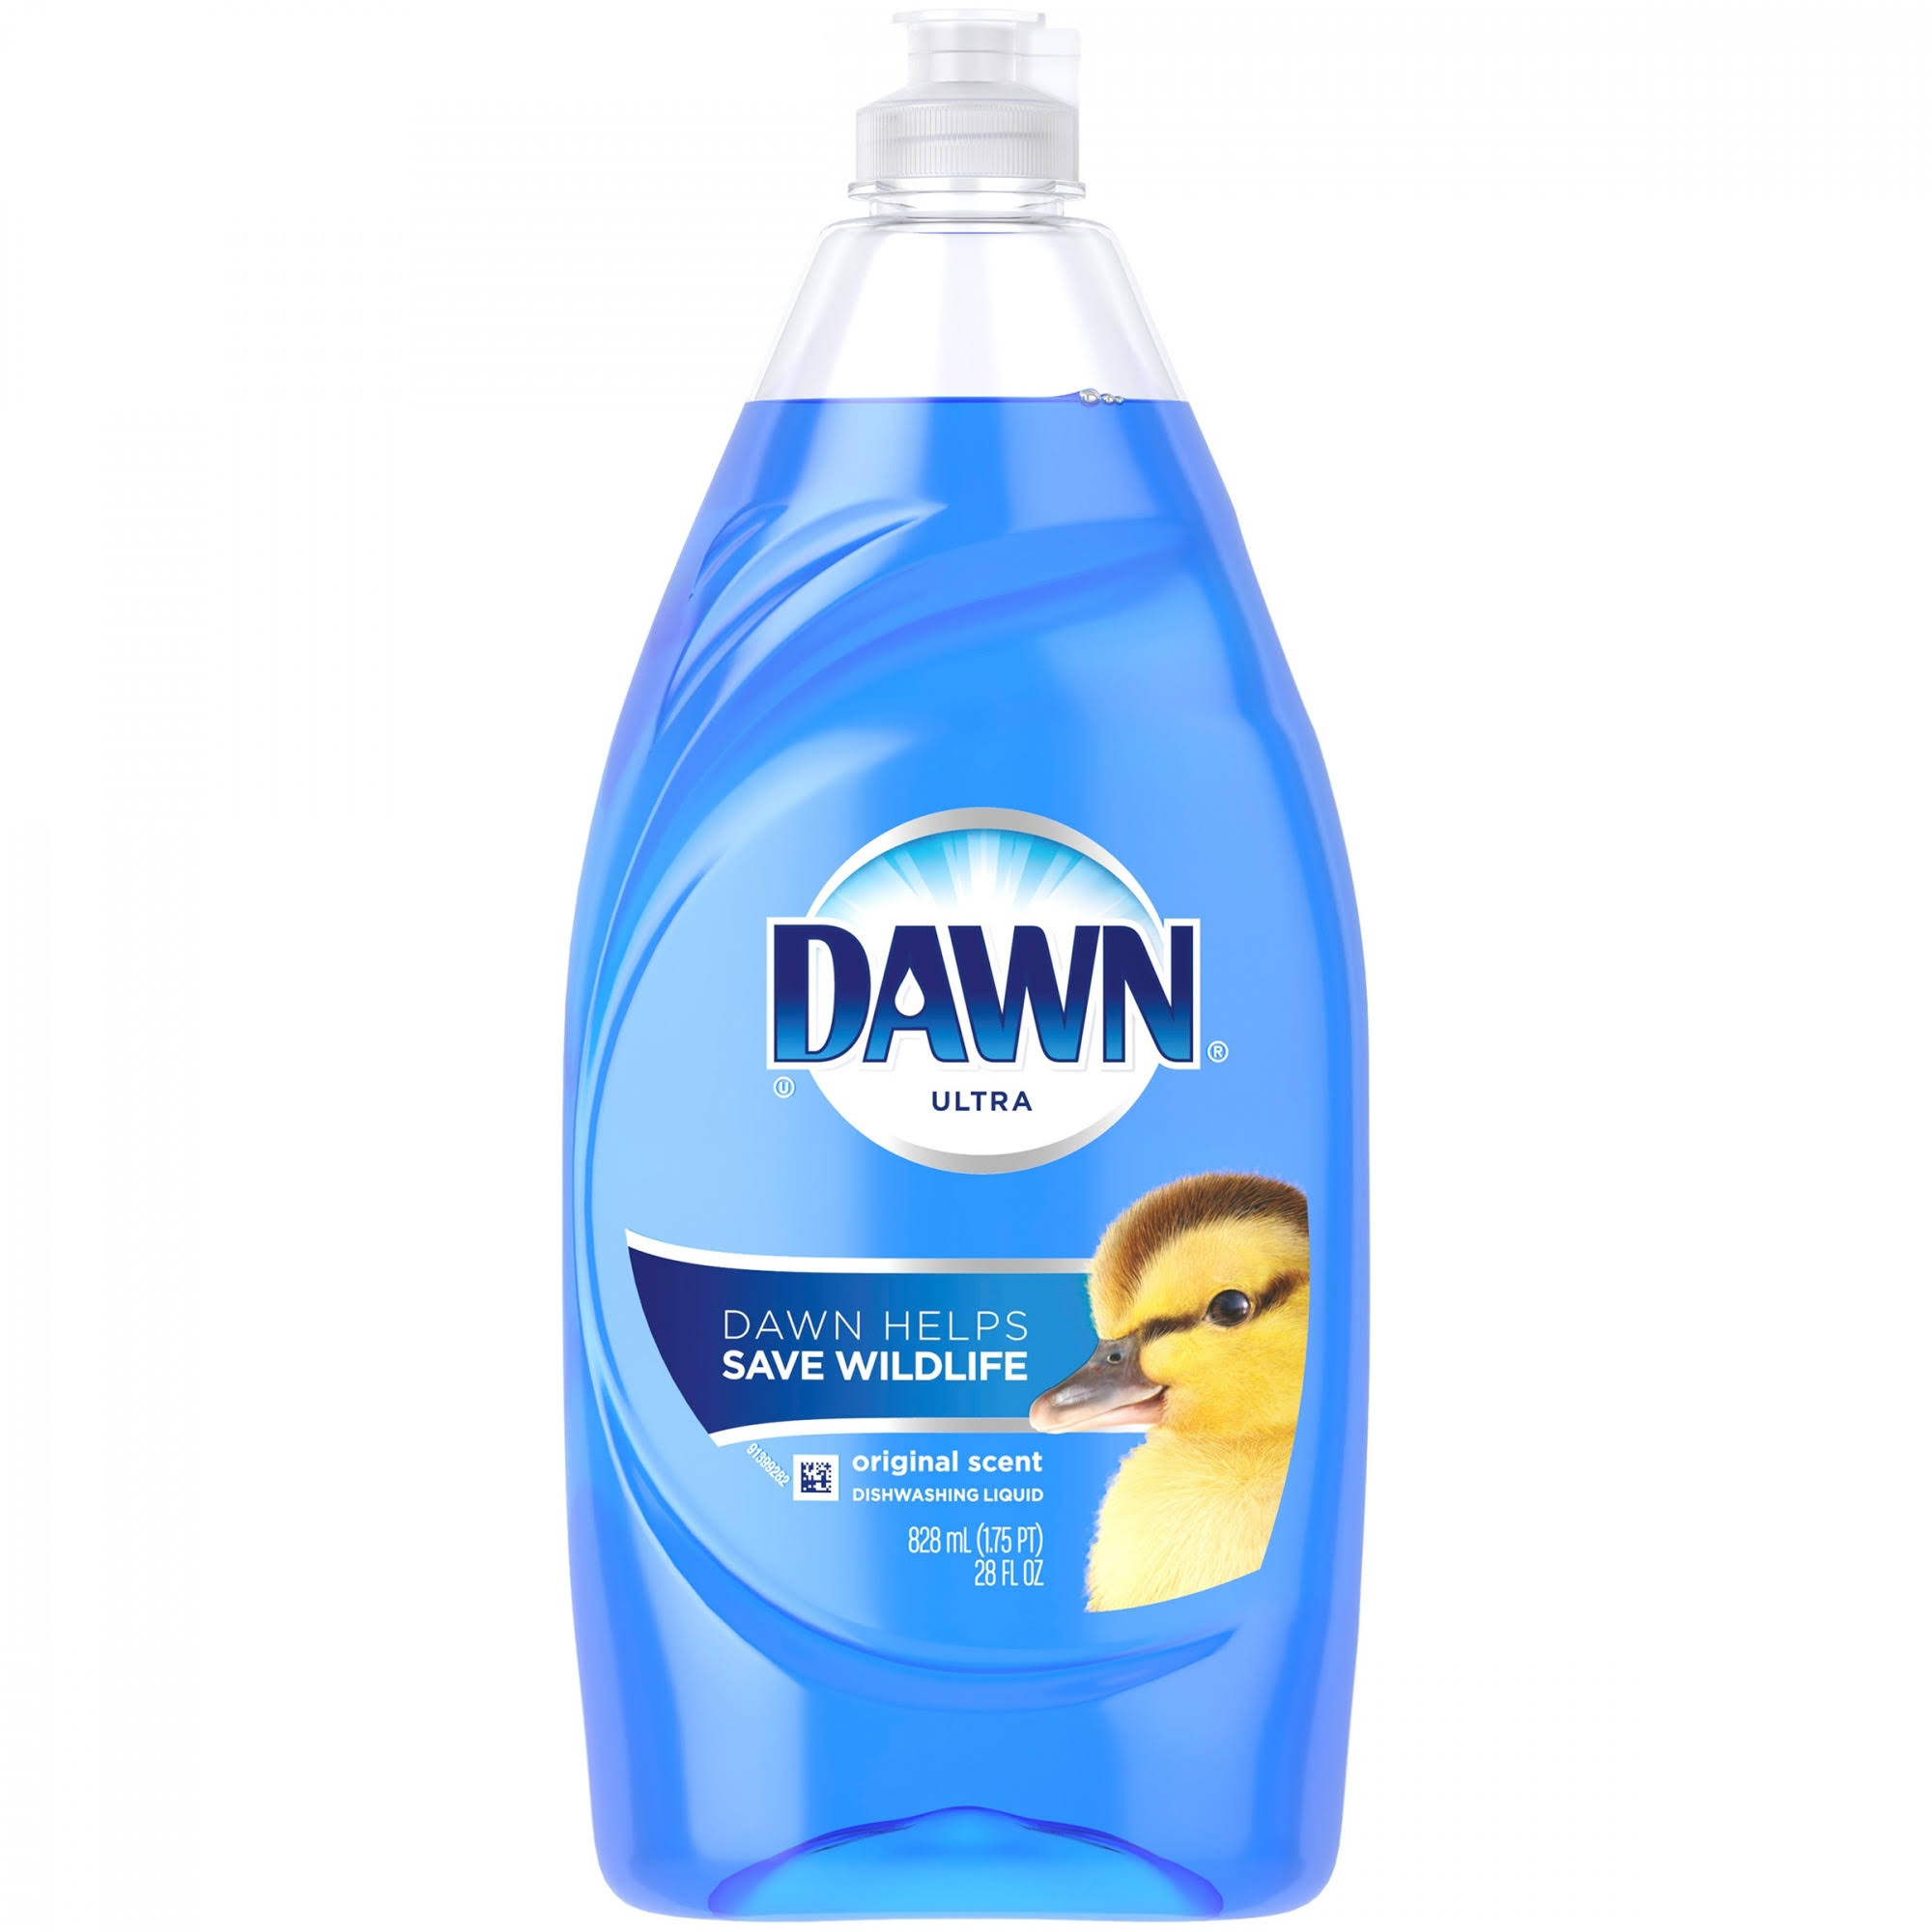 Dawn Ultra Dishwashing Liquid - Original Scent, 28oz